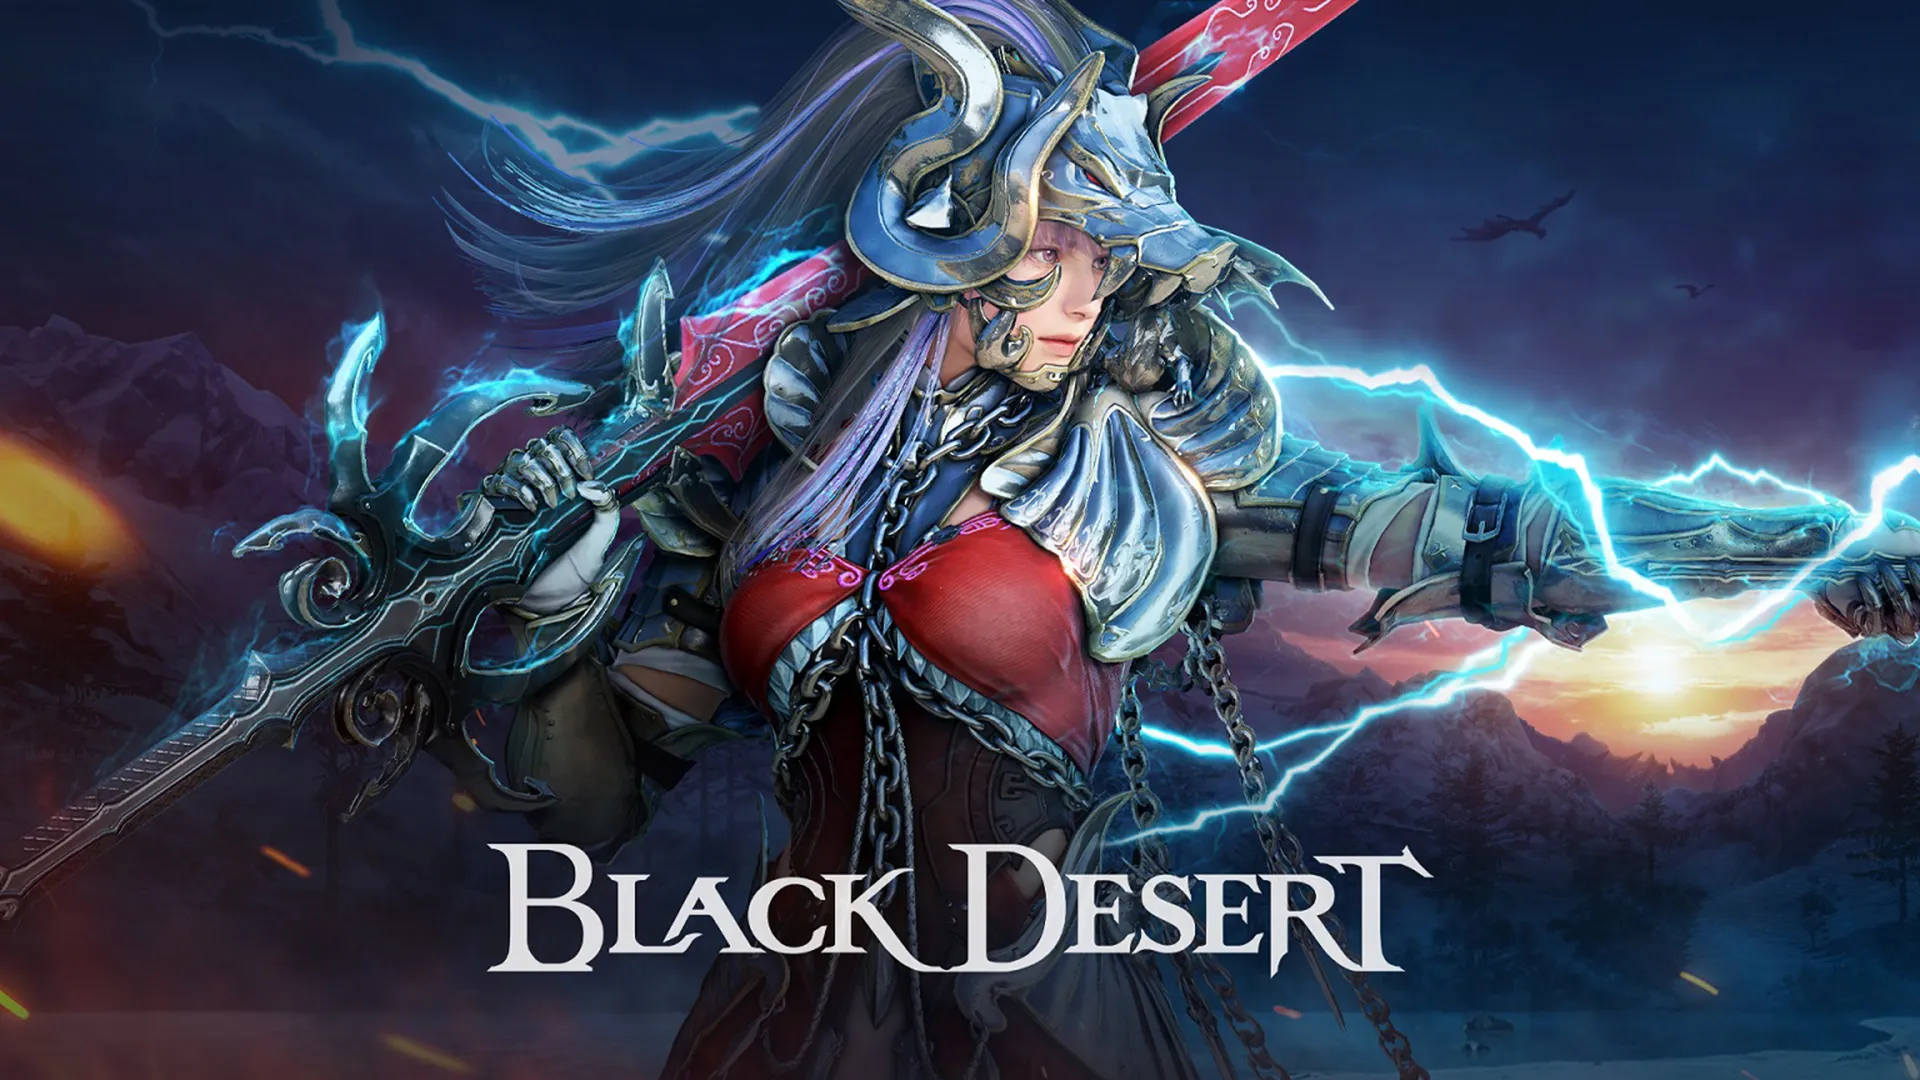 Qual versão do Black Desert jogar? : r/gamesEcultura